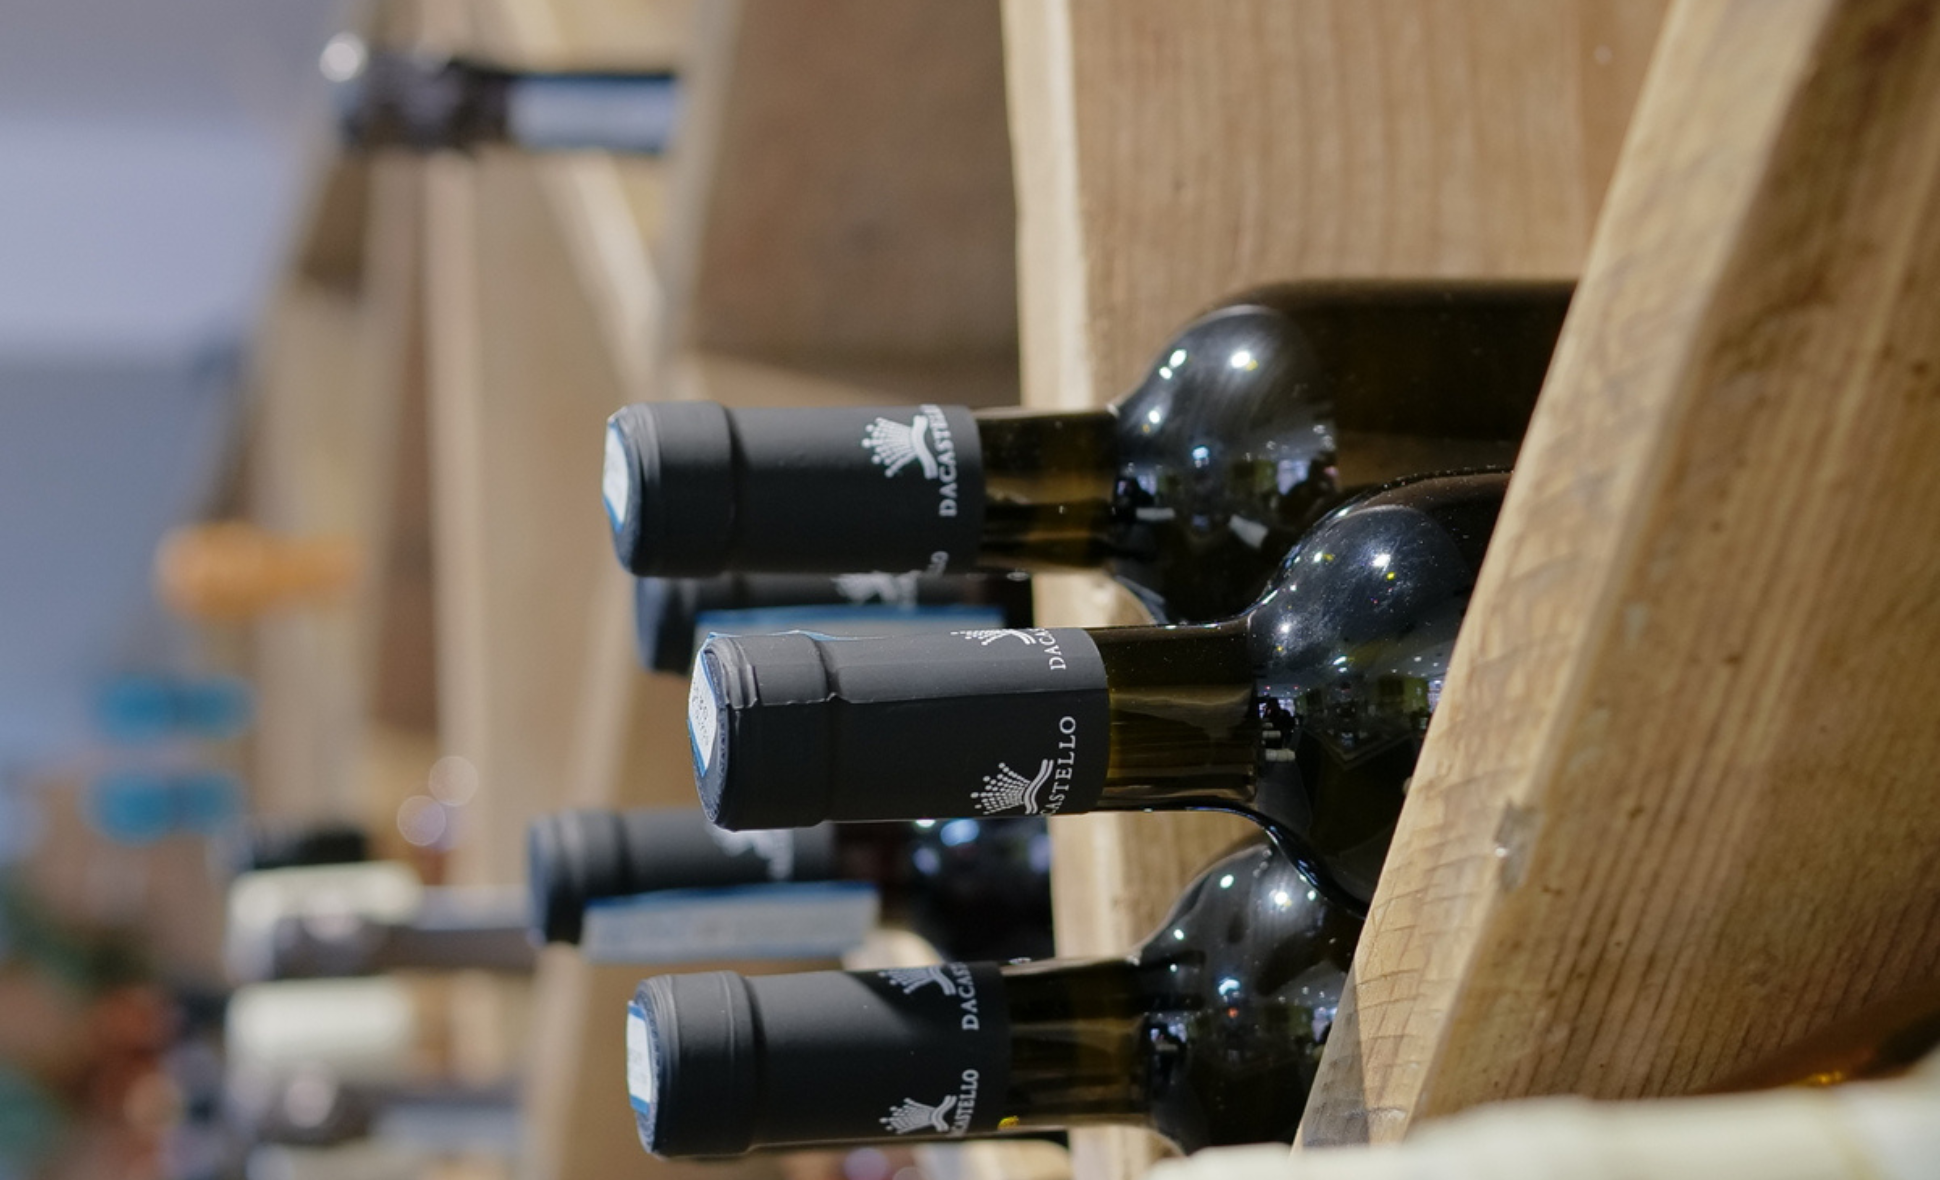 Red wine bottles in a wine rack